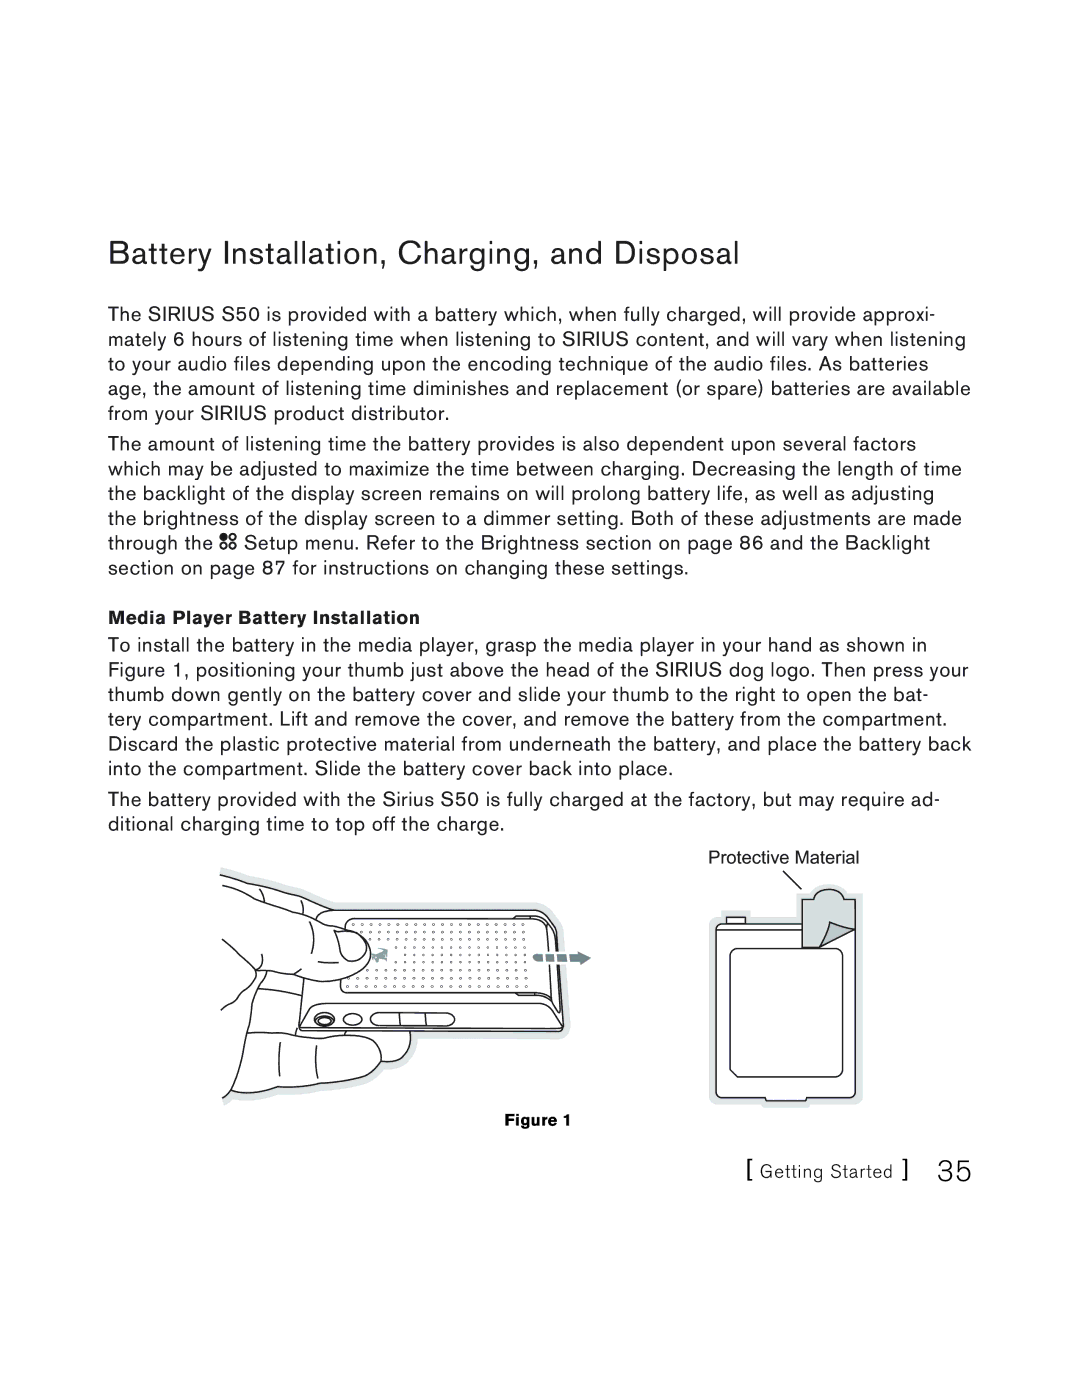 Sirius Satellite Radio S50 user manual Battery Installation, Charging, and Disposal 